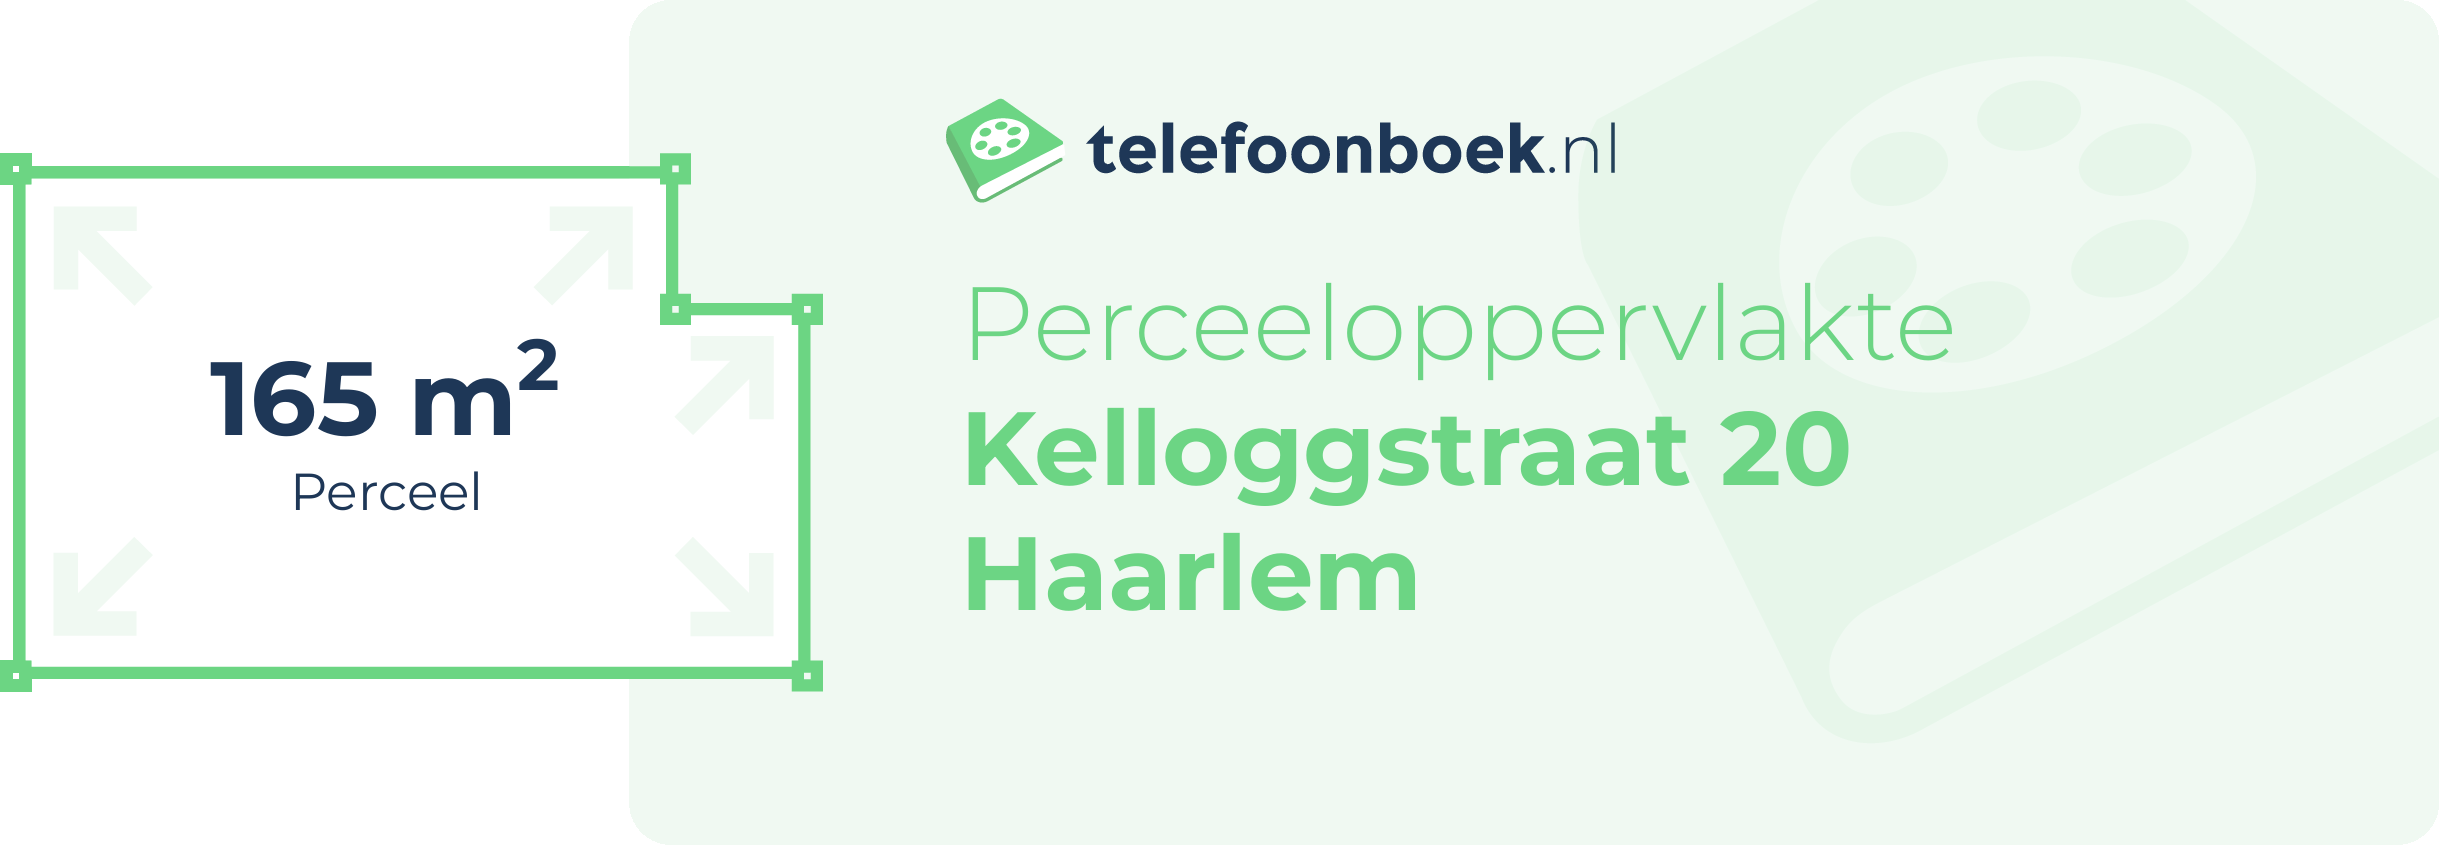 Perceeloppervlakte Kelloggstraat 20 Haarlem